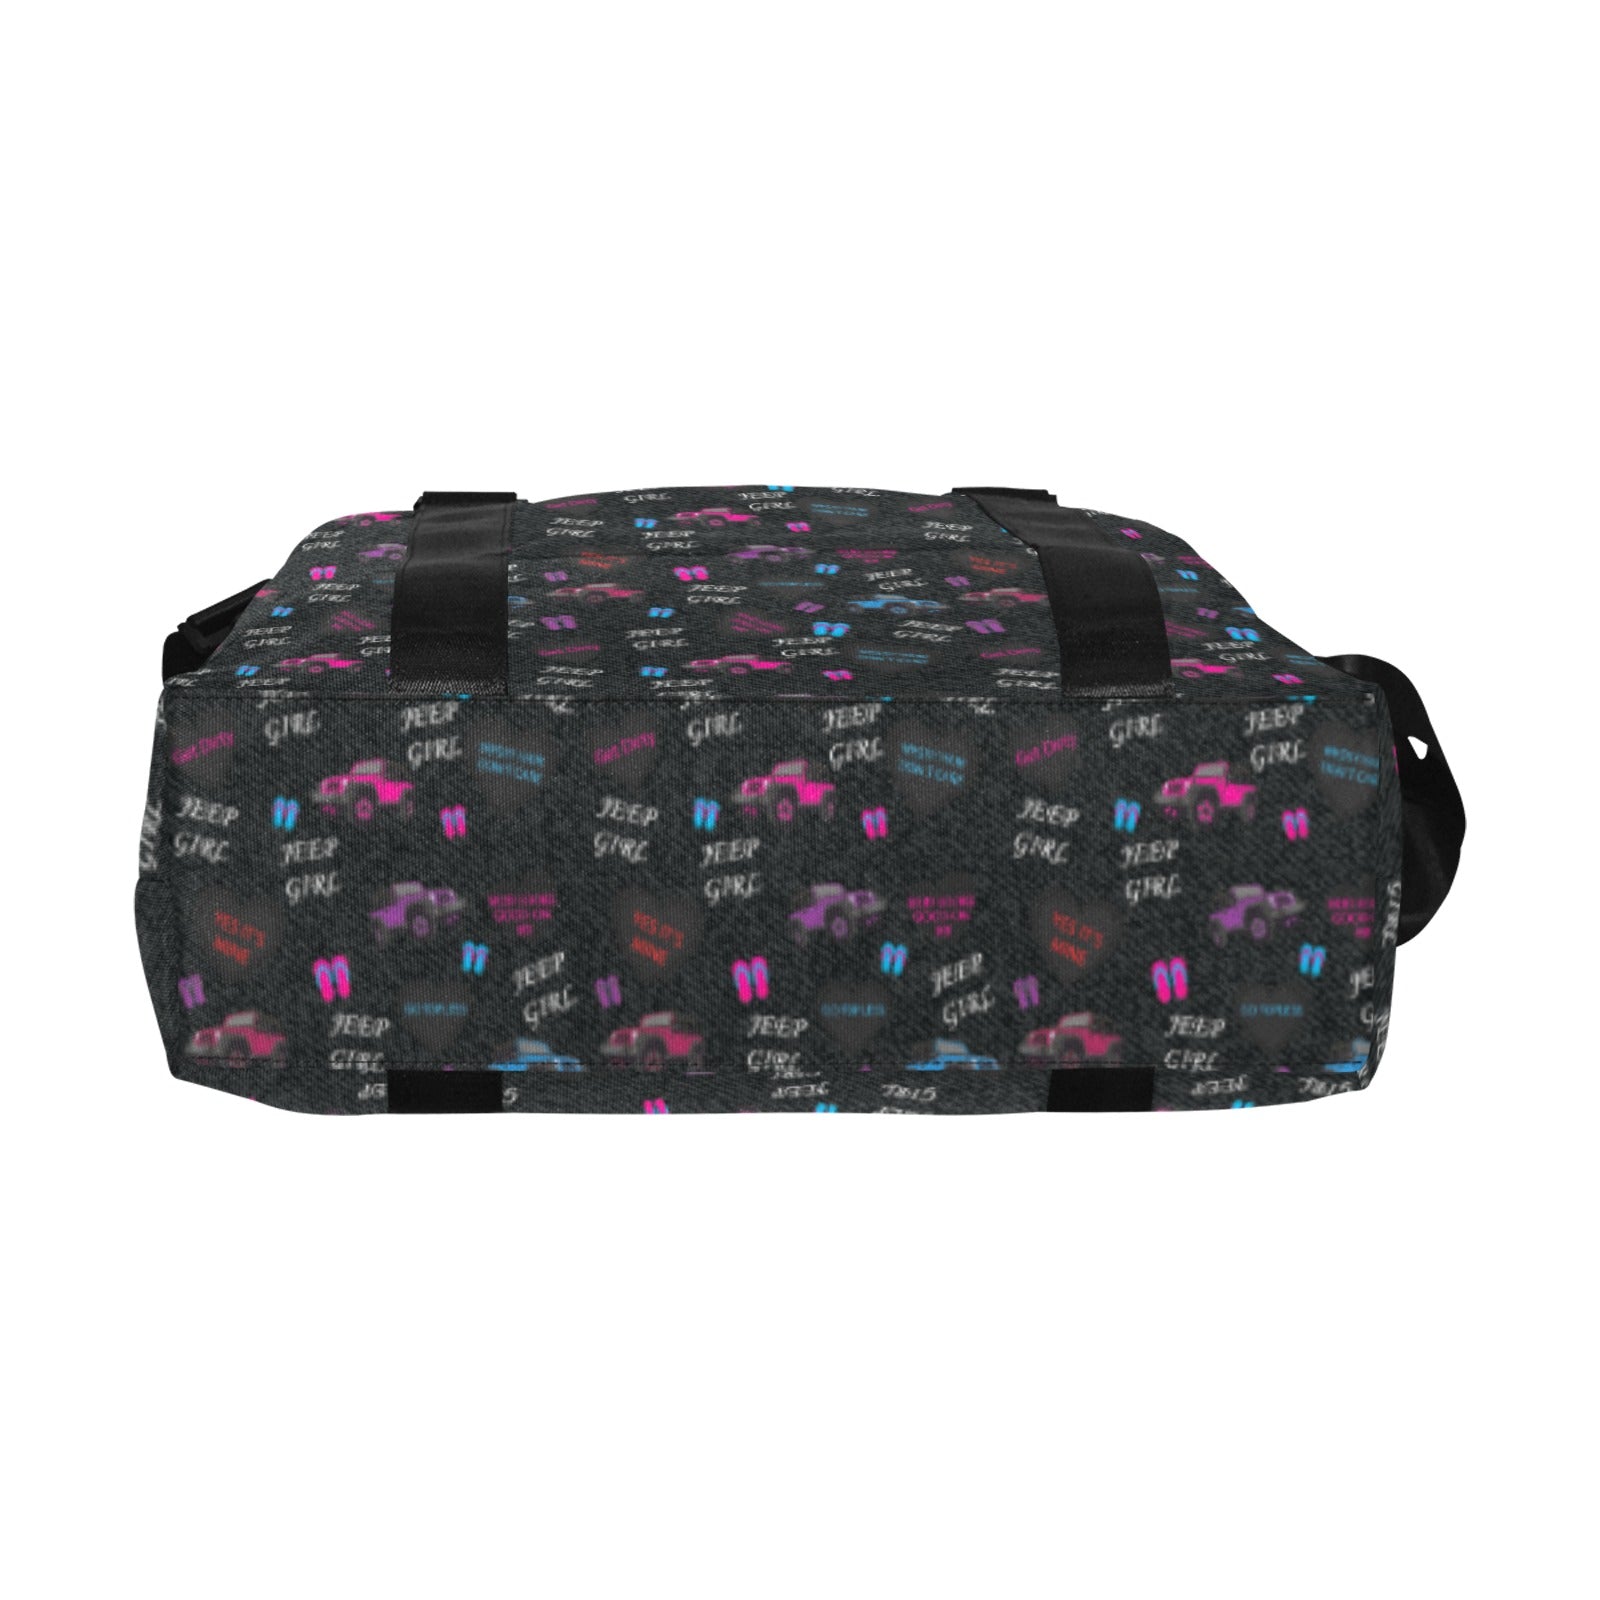 Jeeper Girl Large Capacity Duffle Bag